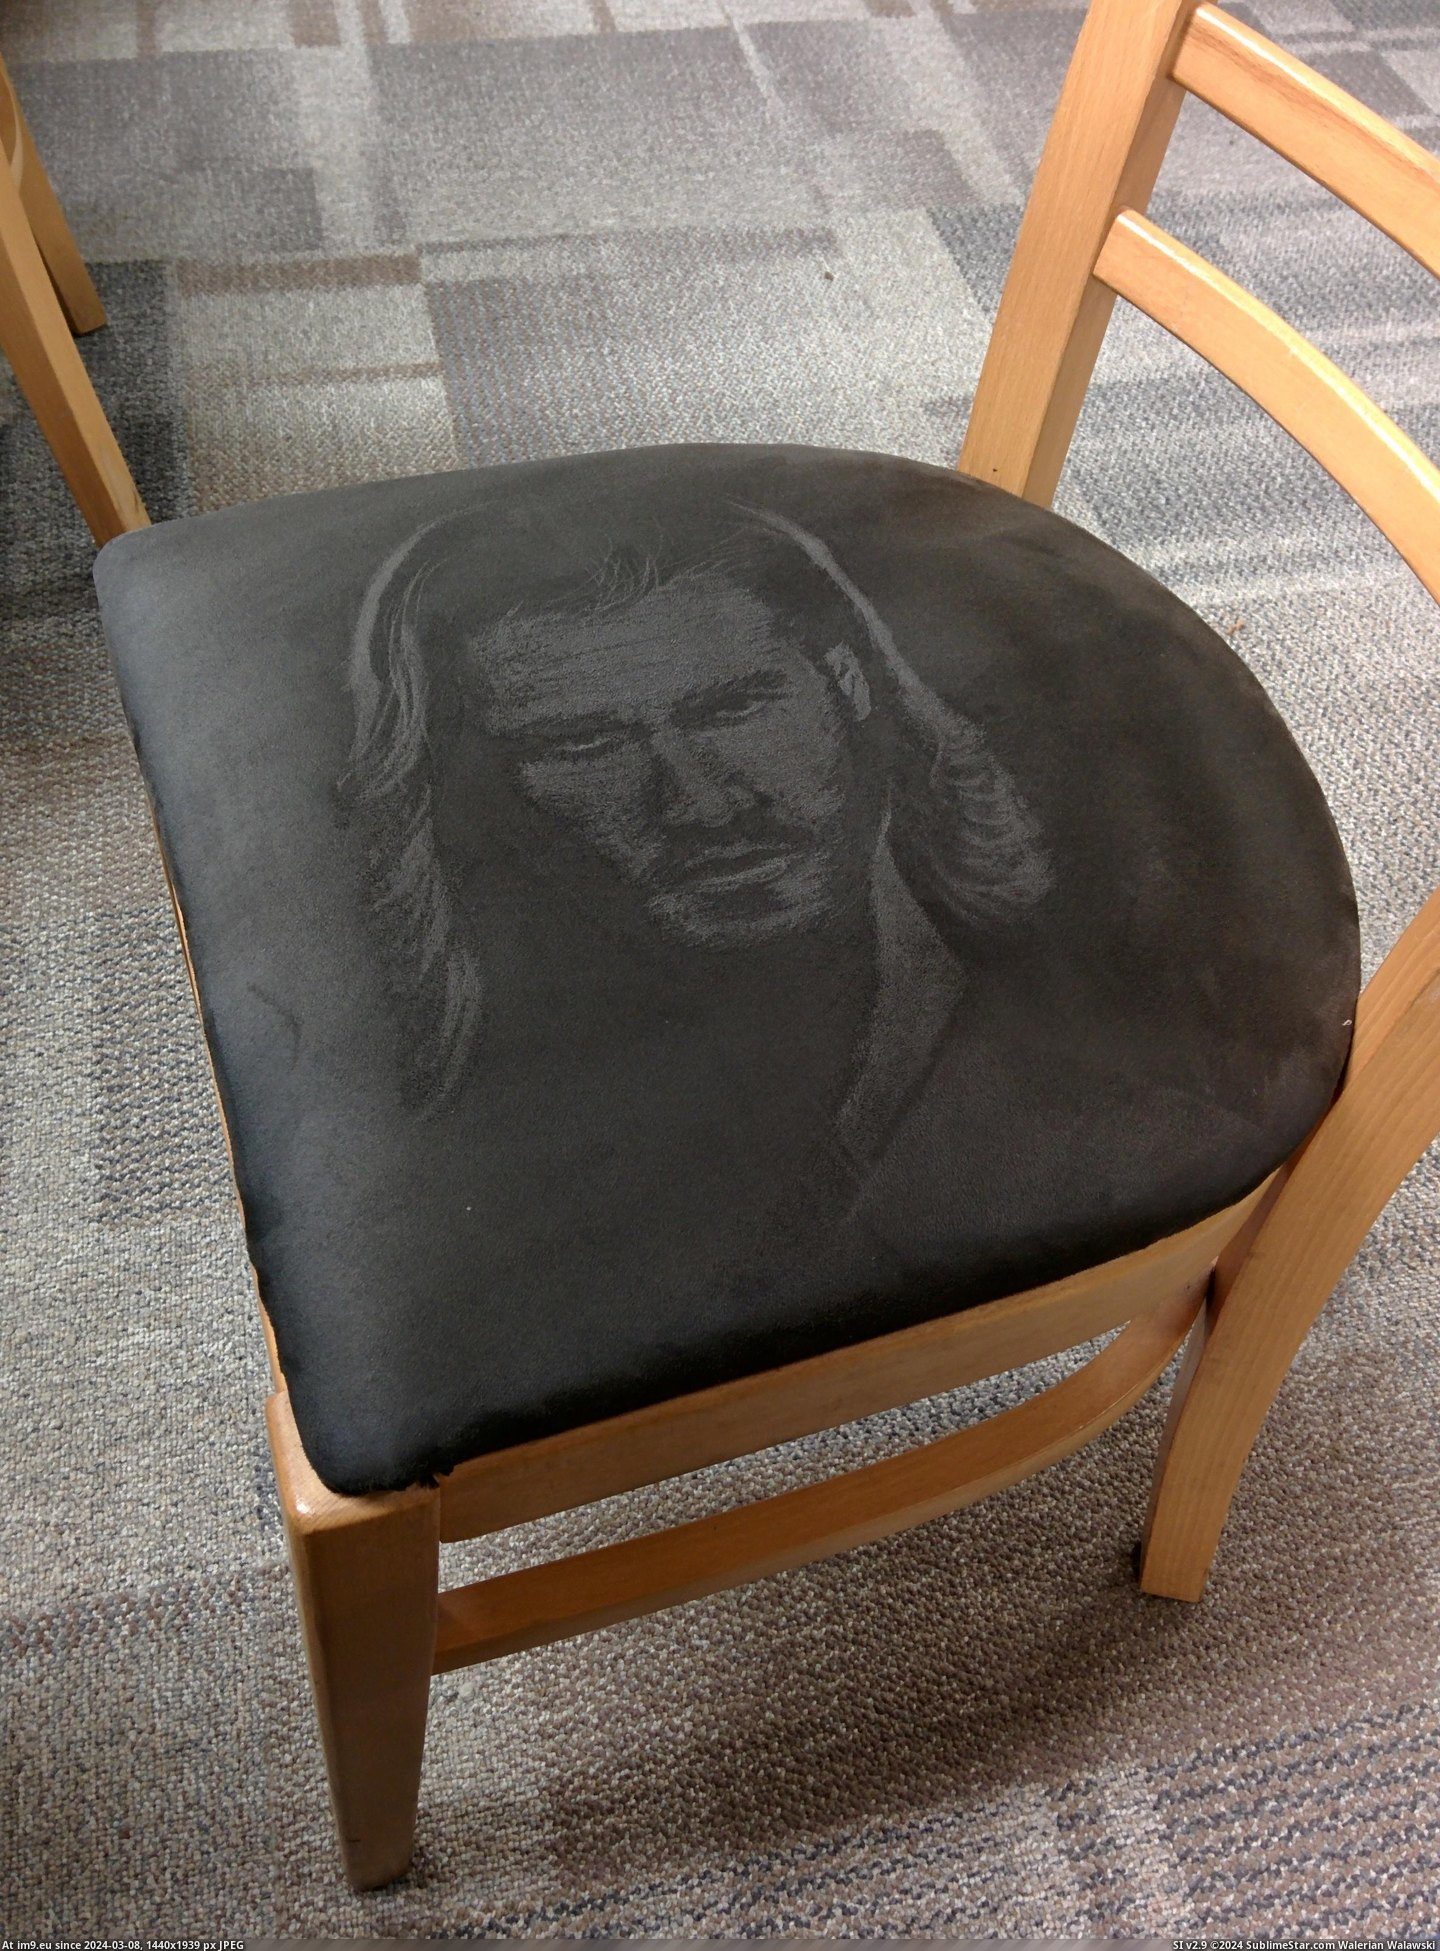 #Chair #Thor #Suede #Drew [Pics] Someone drew Thor on a suede chair Pic. (Bild von album My r/PICS favs))